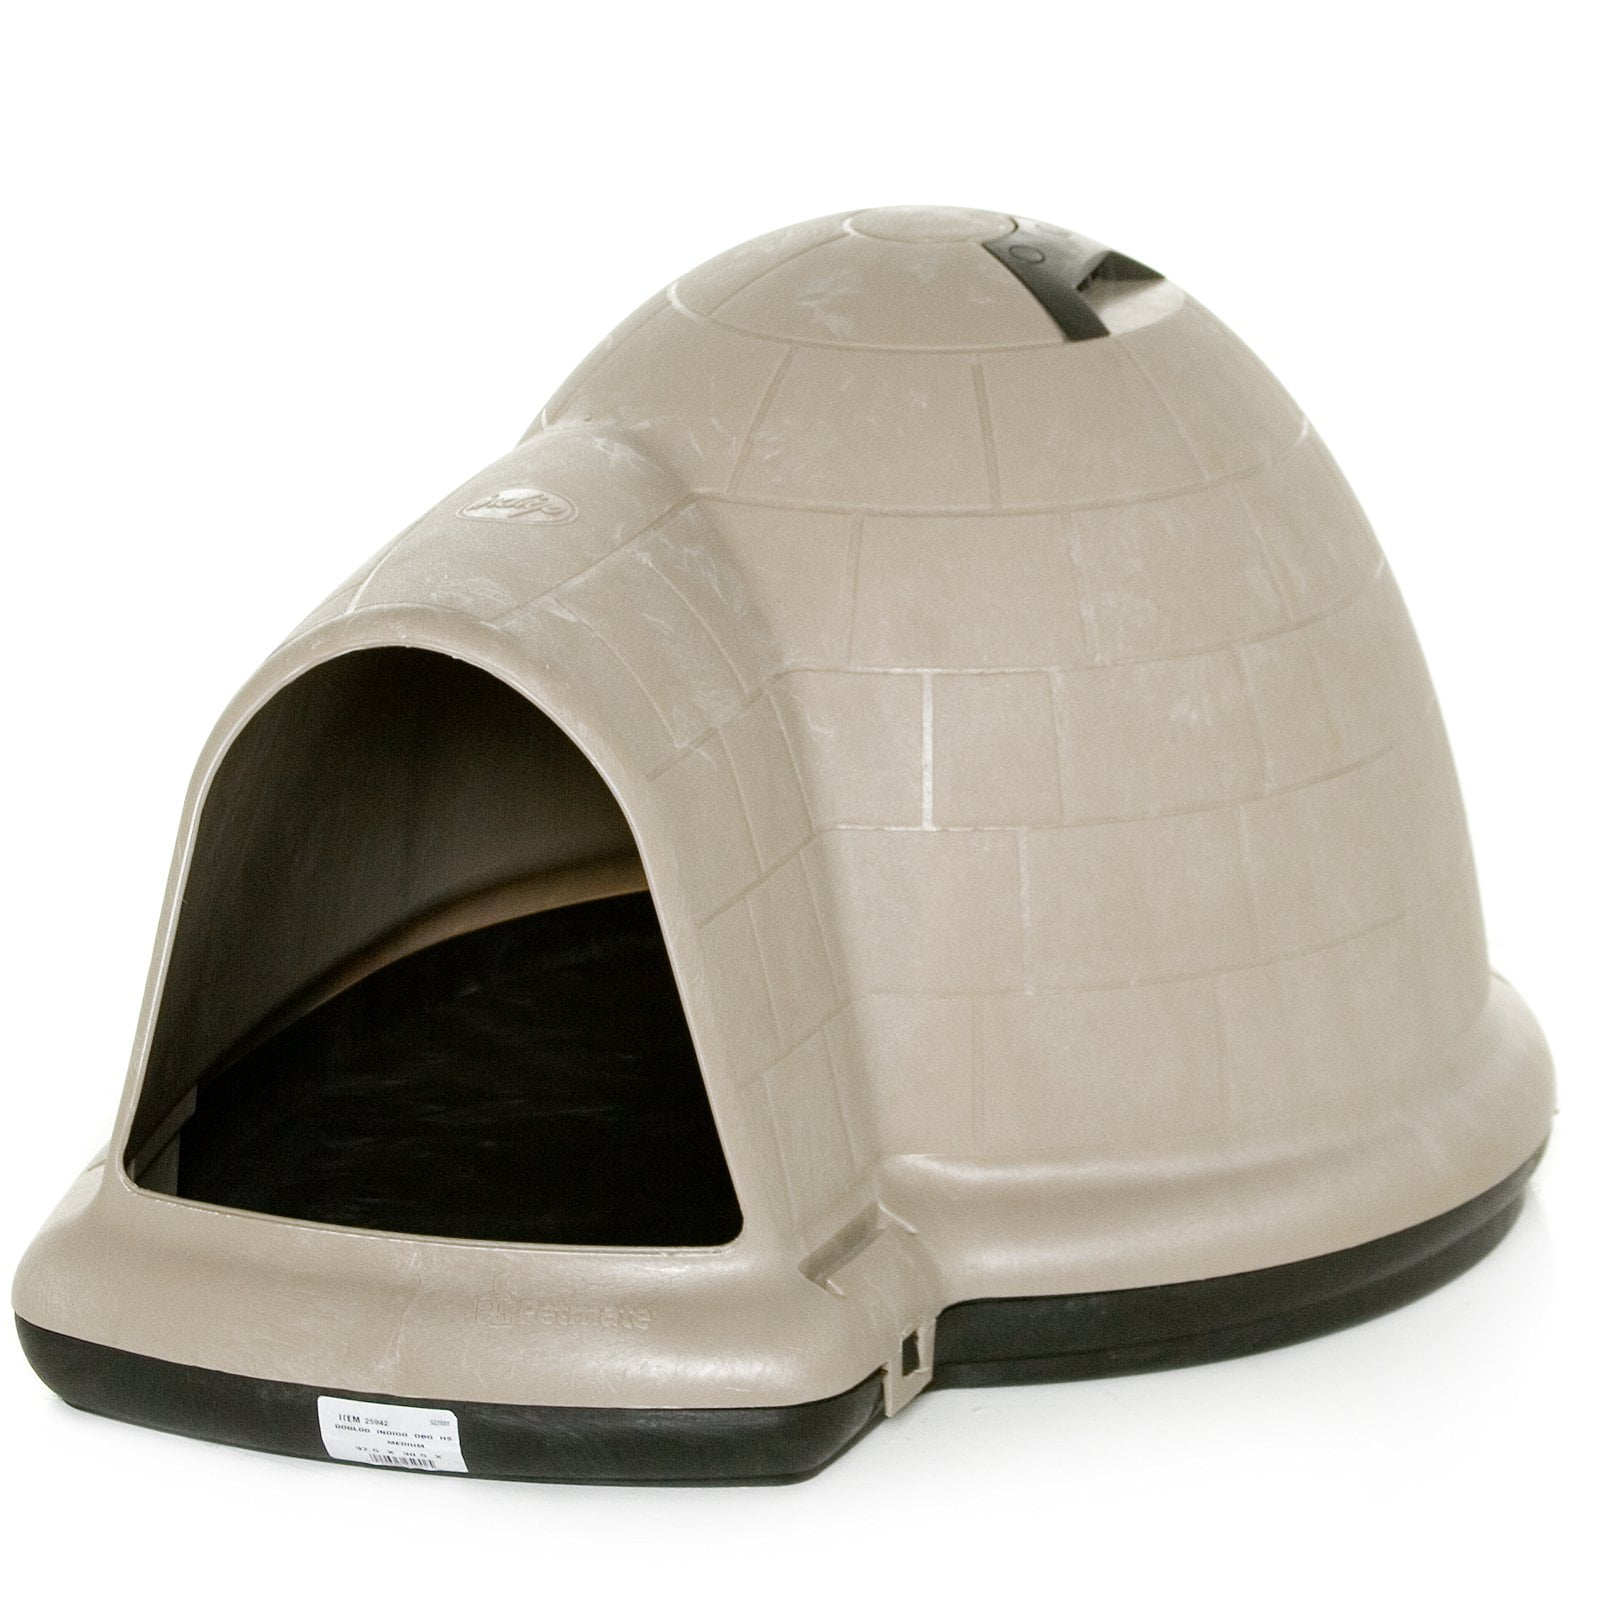 walmart dog igloo house